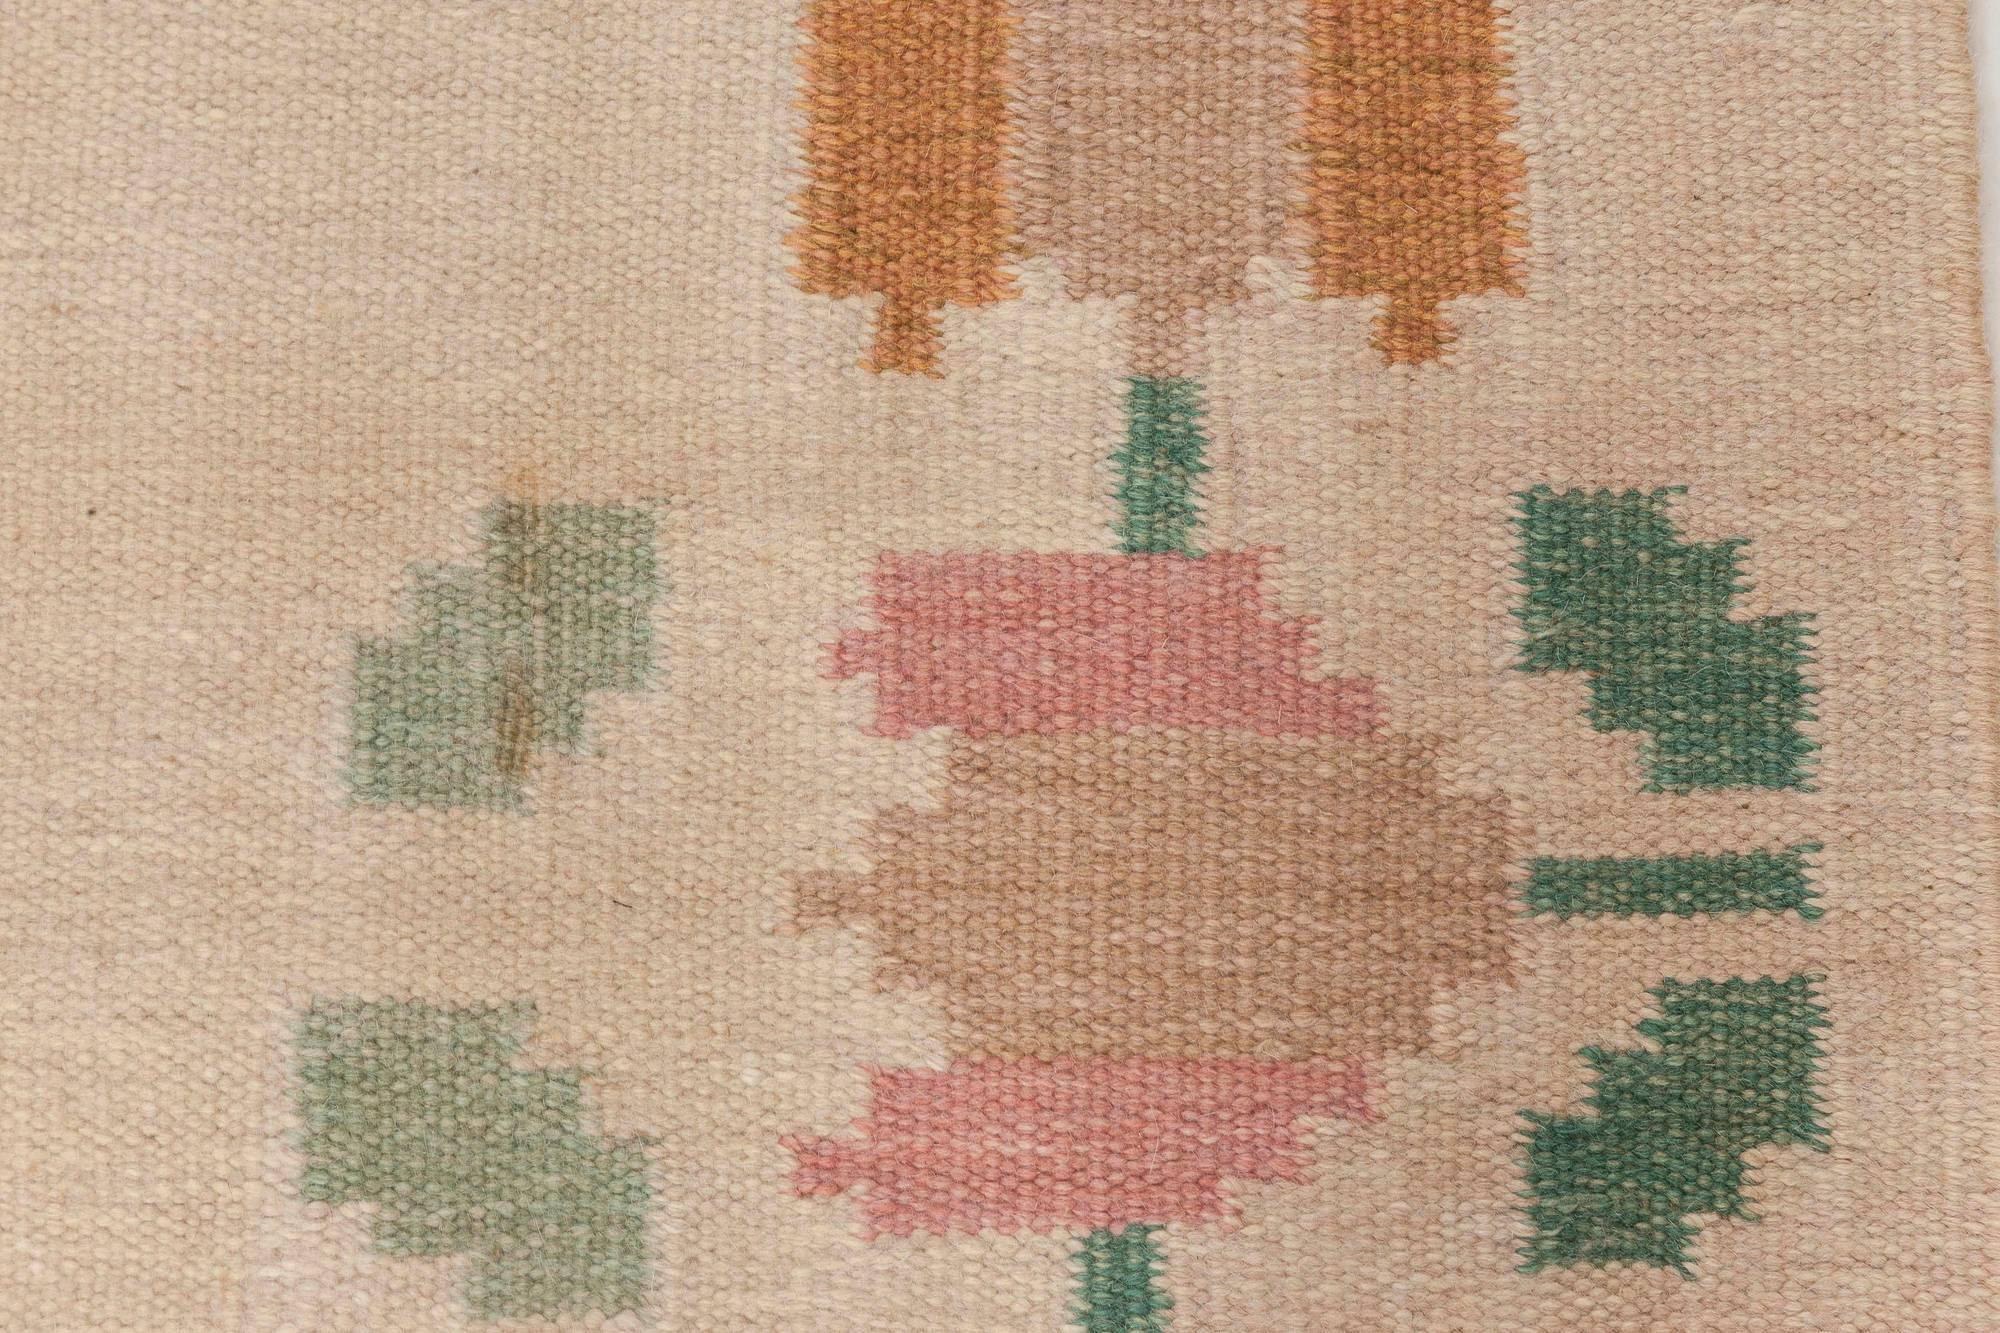 Vintage Swedish flat-weave rug signed by Anne Marie Boberg
Size: 4'6